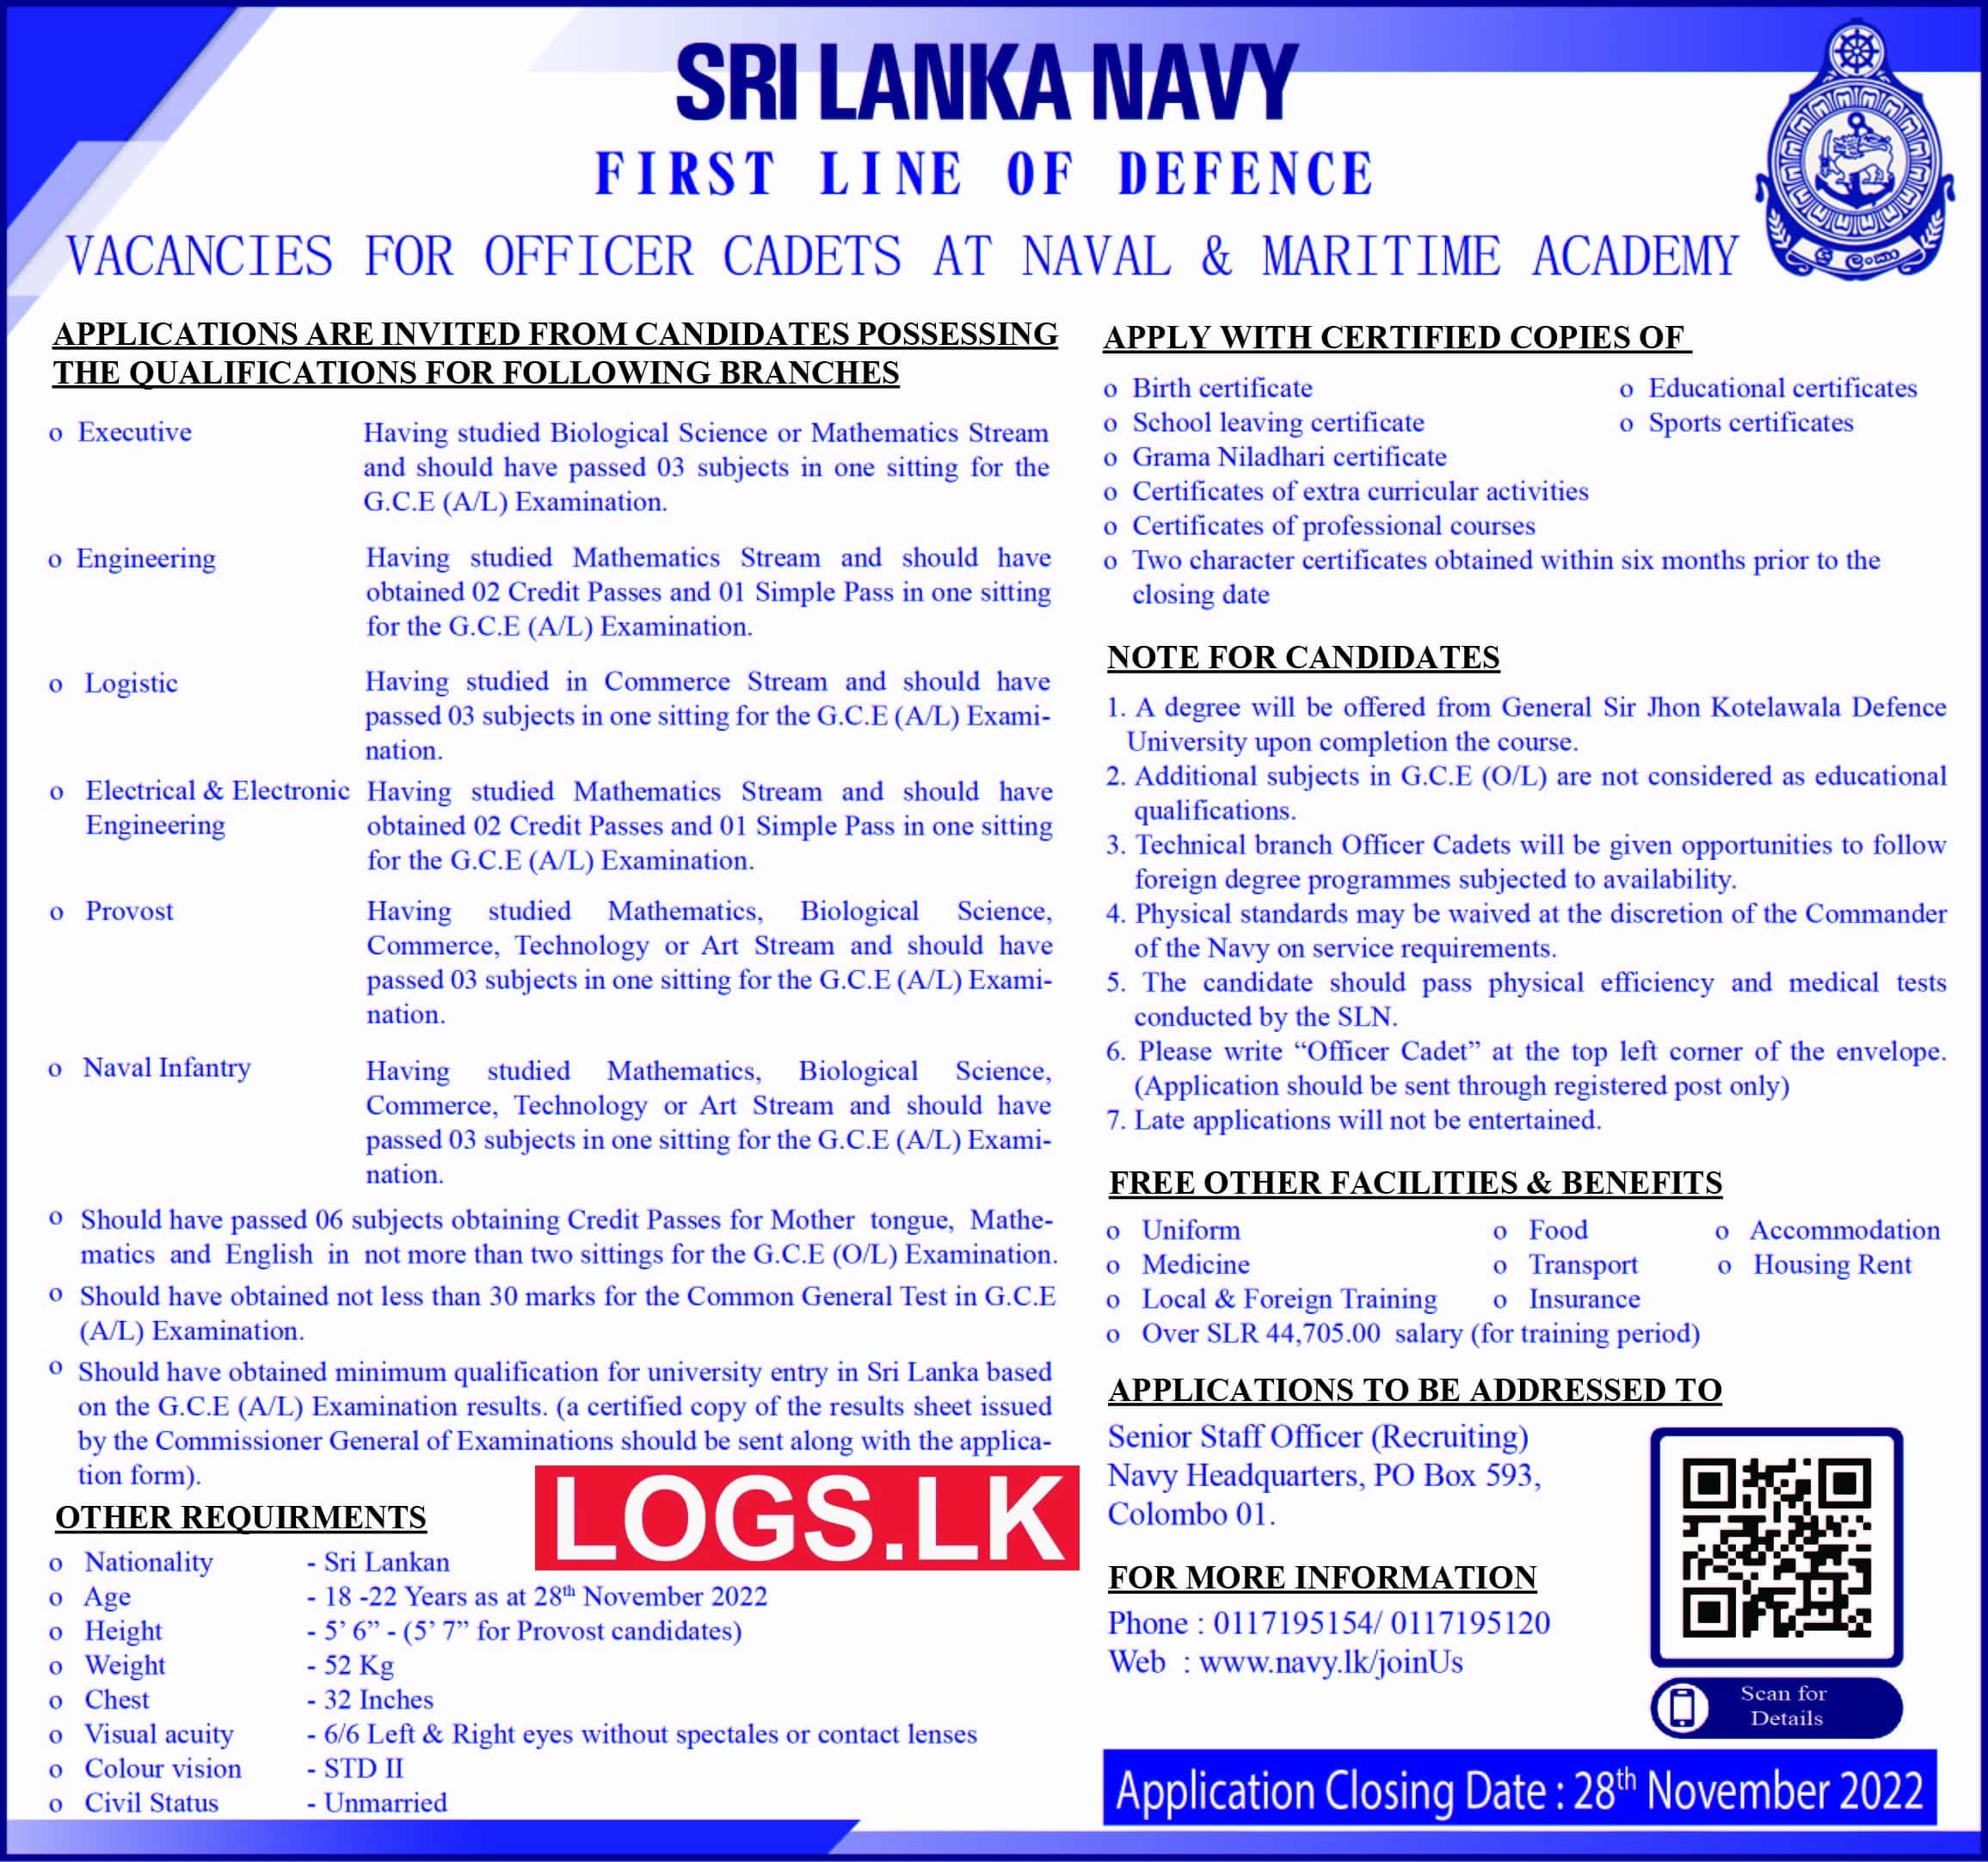 Sri Lanka Navy Cadet Officers Jobs Vacancies 2022 Application Form, Details Download